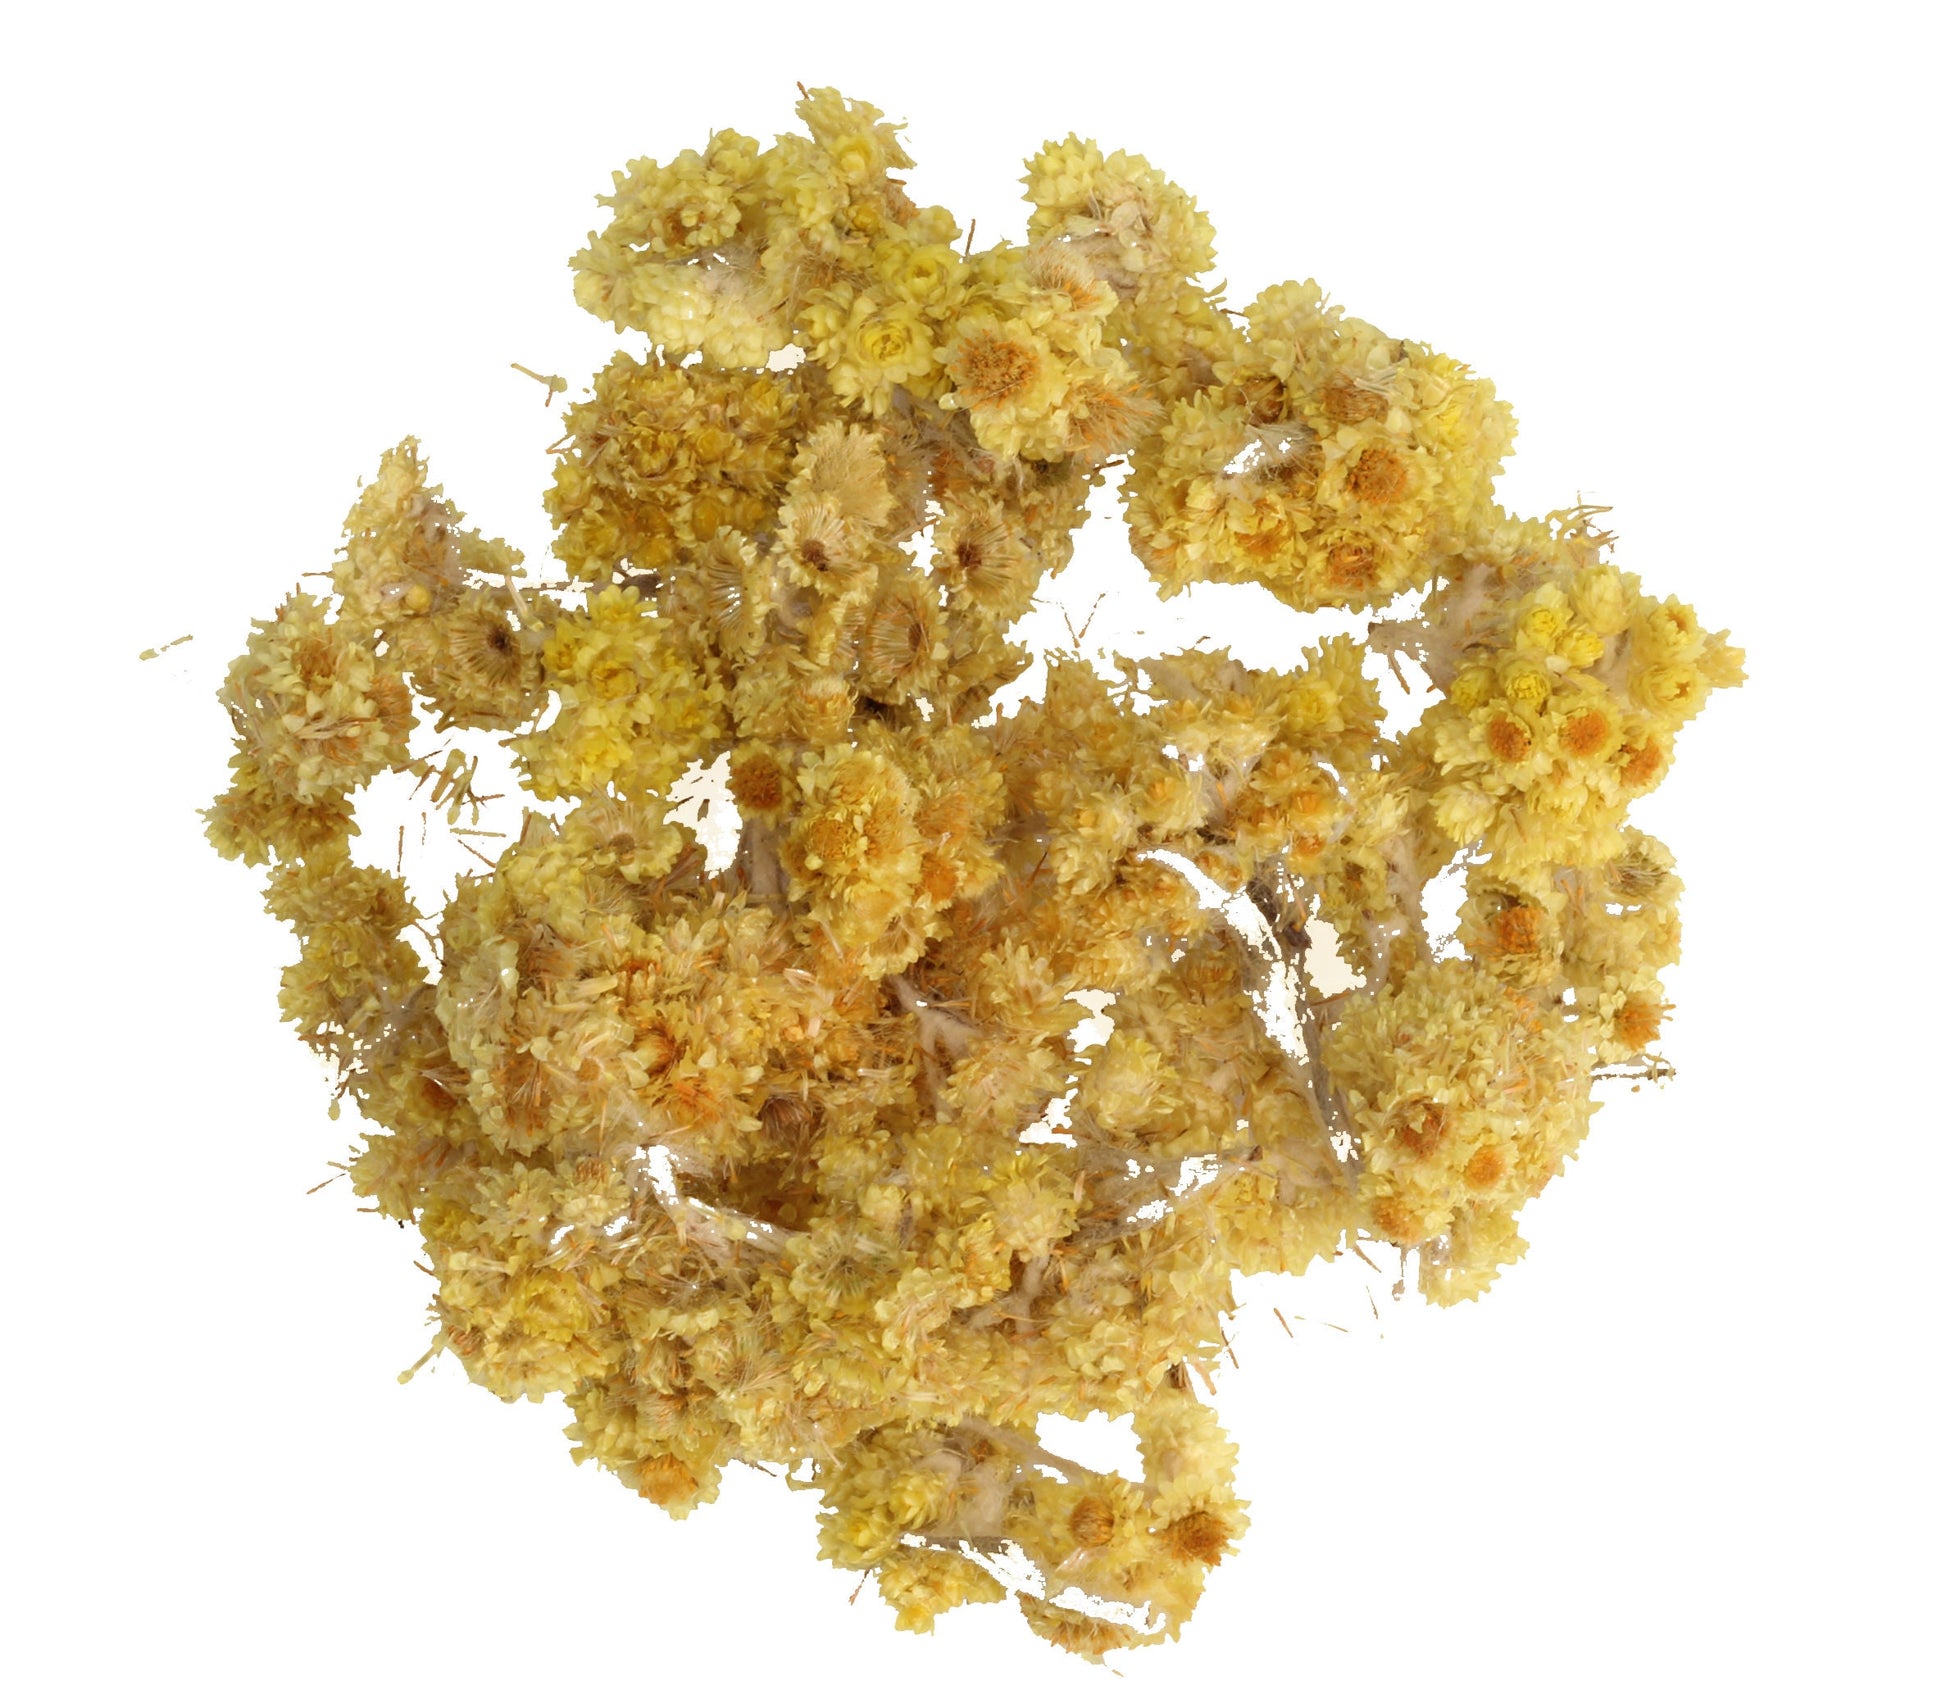 Sandy Everlasting Dried flowers tea BIO Organic 25g 0.88 oz Vesta Market